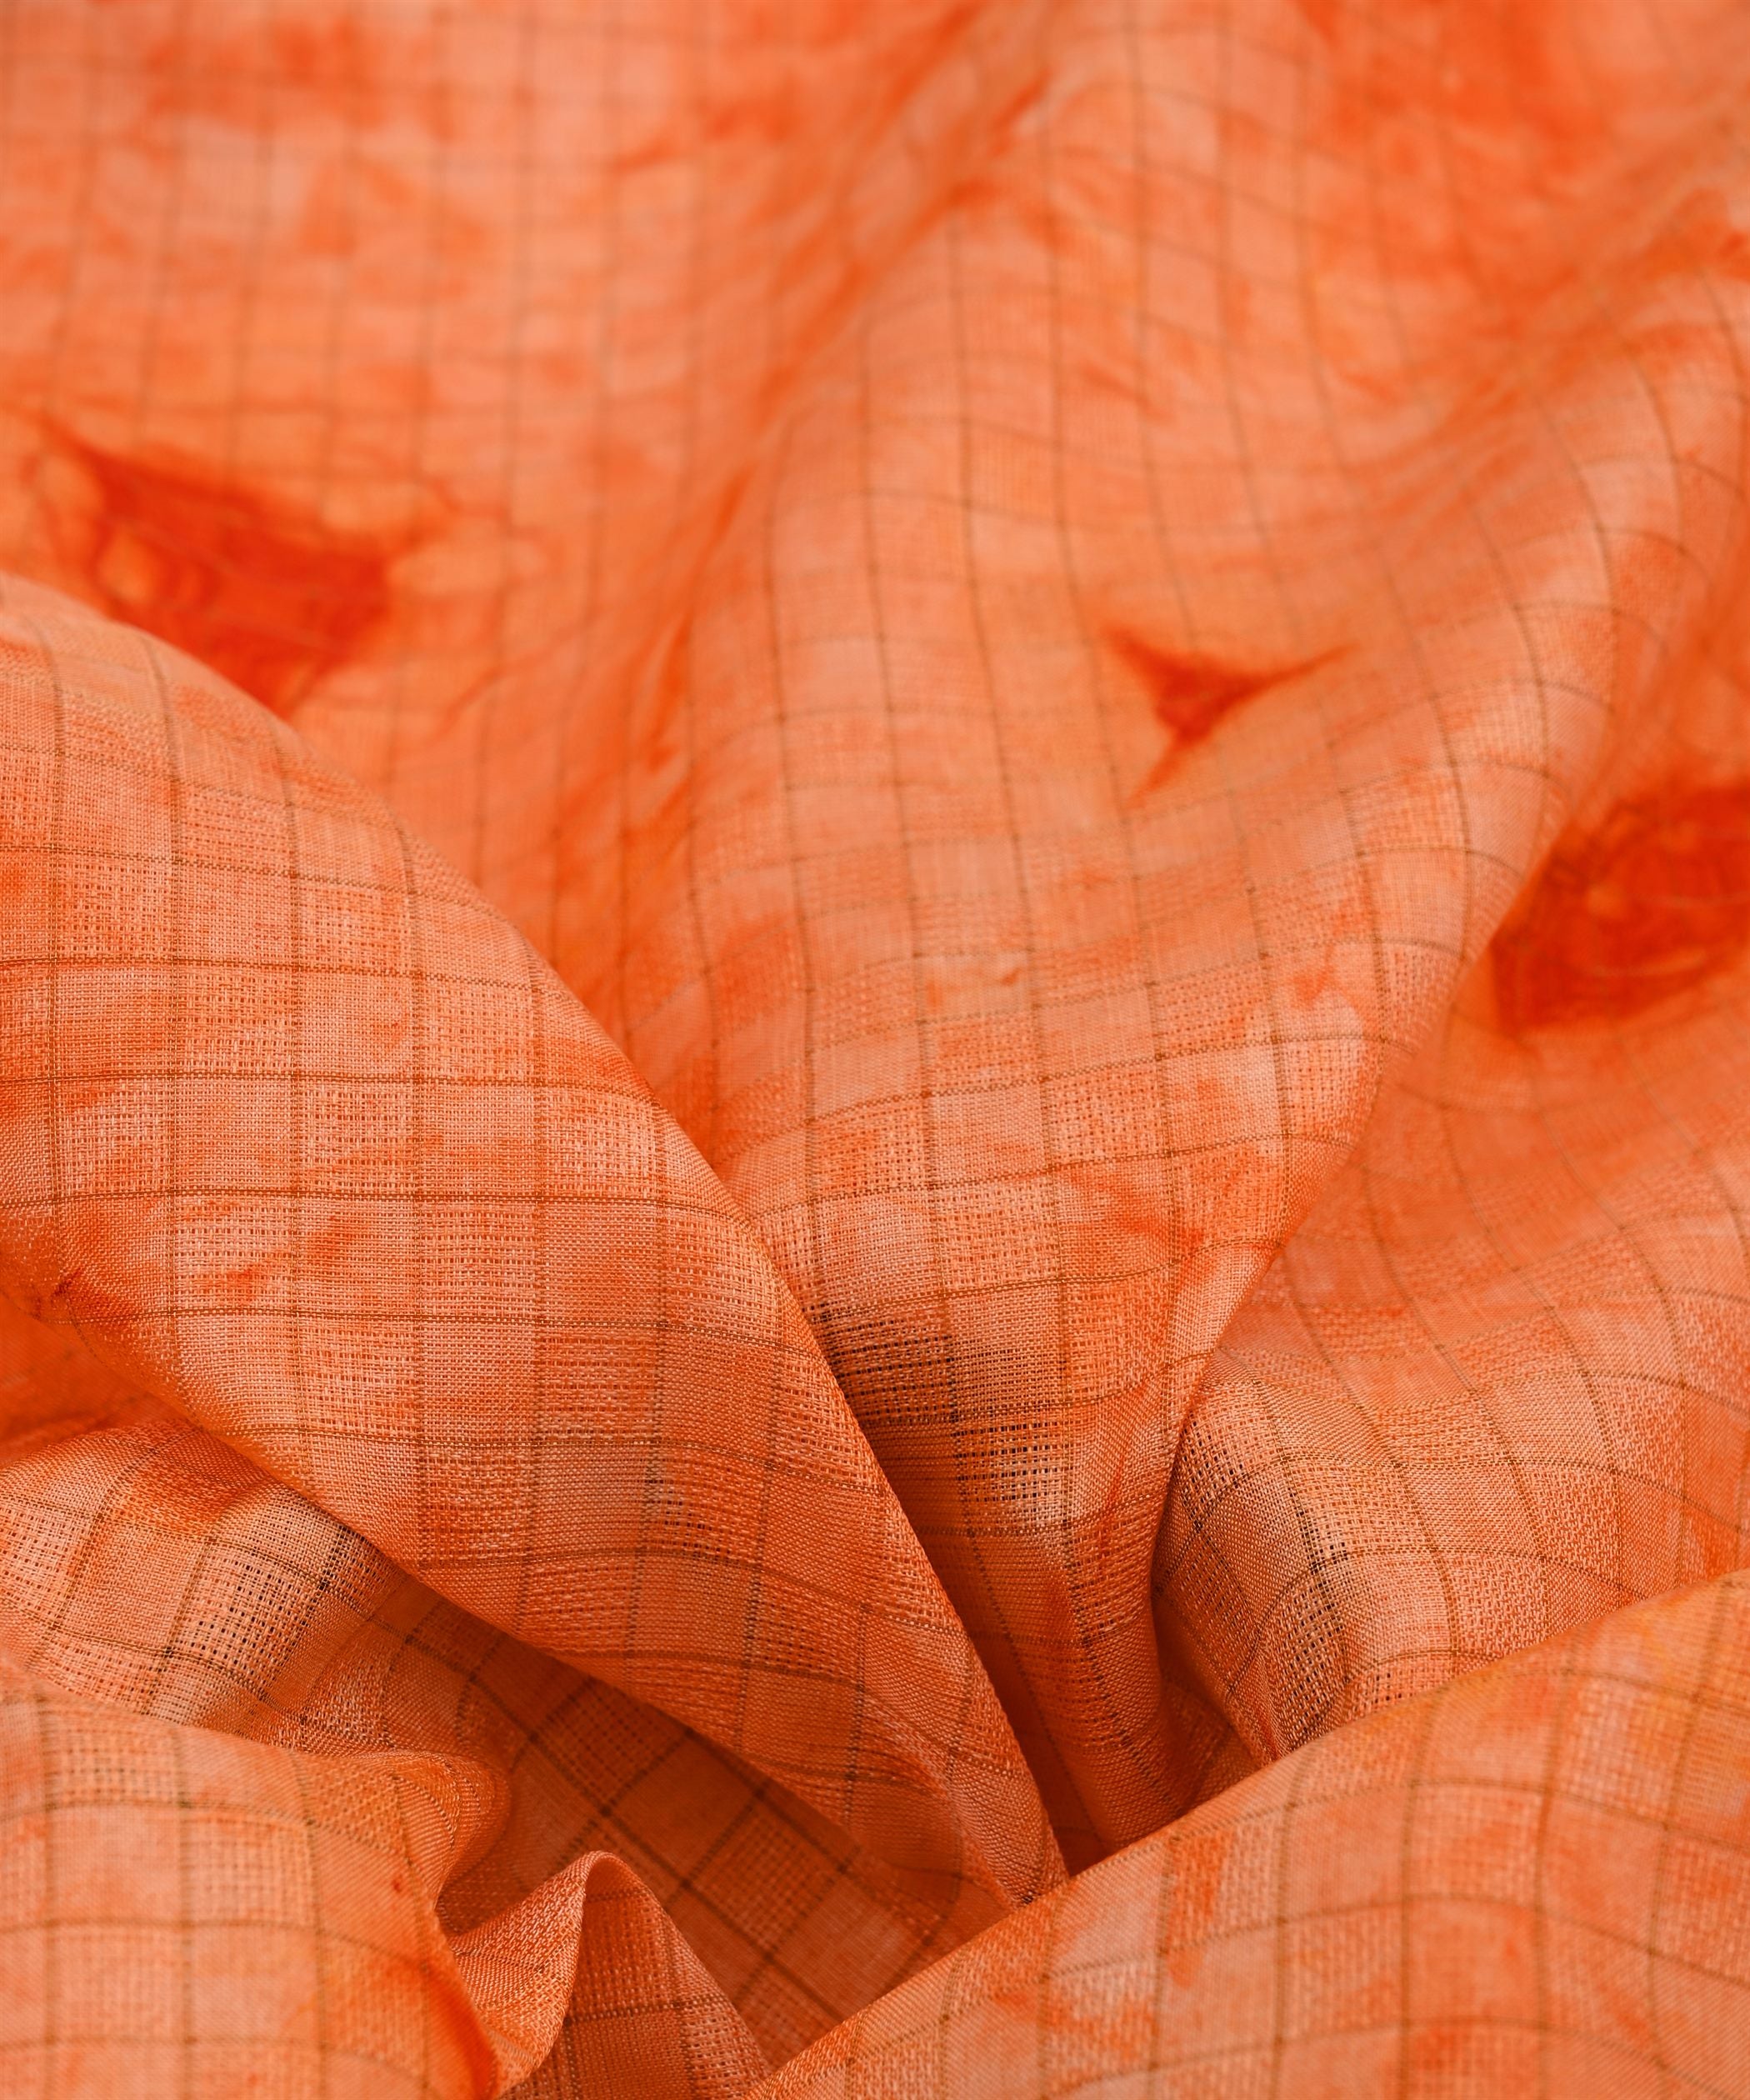 Orange Jute Fabric with Checks and Shibori Print